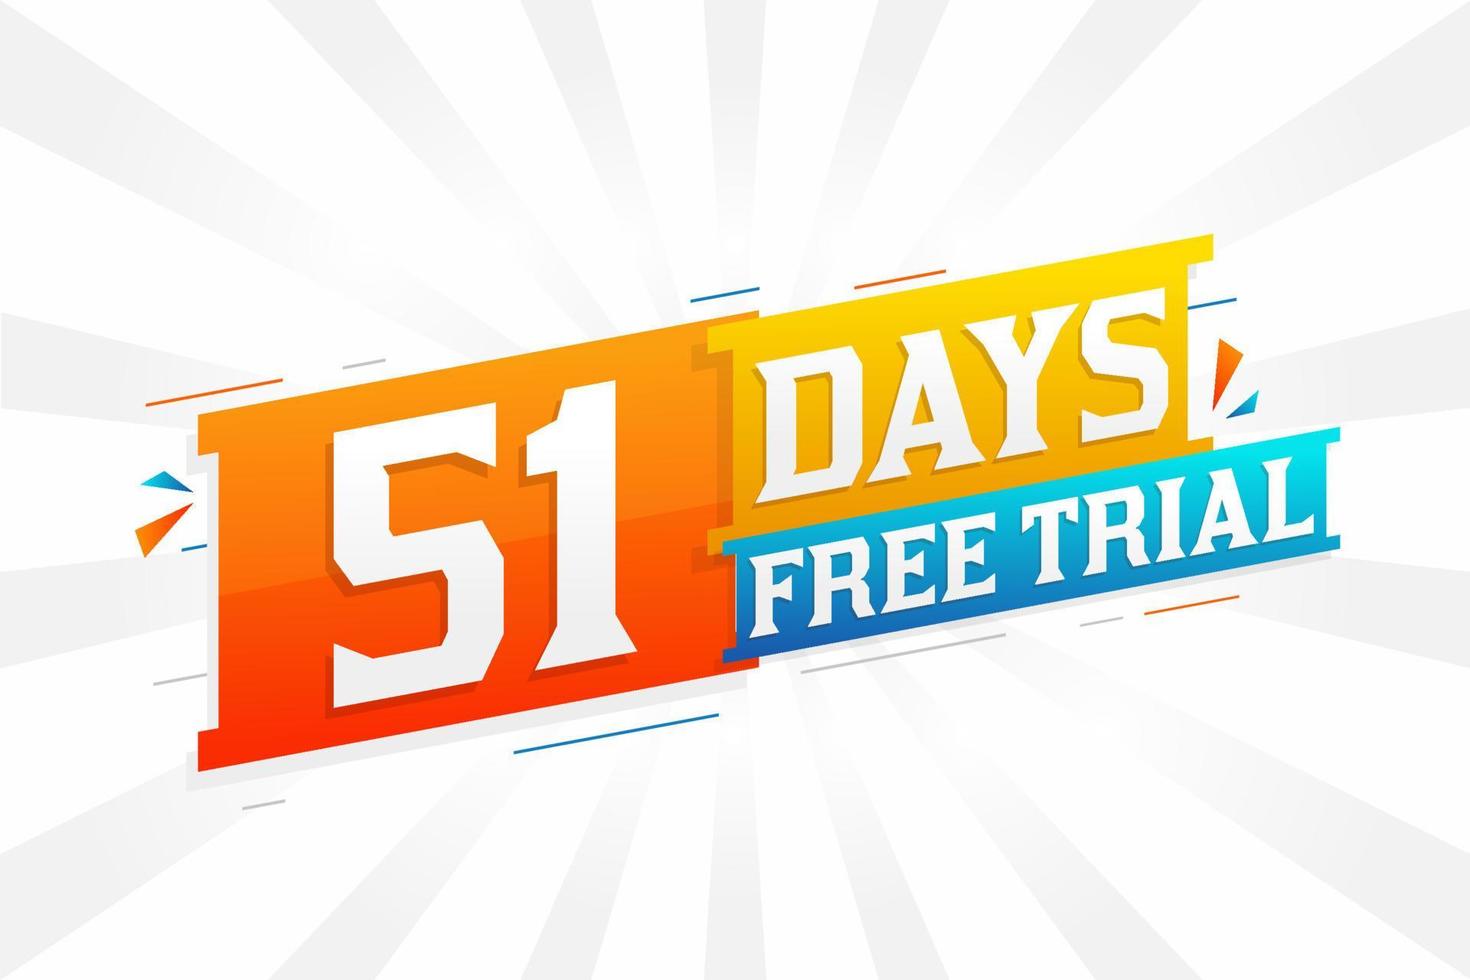 Vector de stock de texto en negrita promocional de prueba gratuita de 51 días